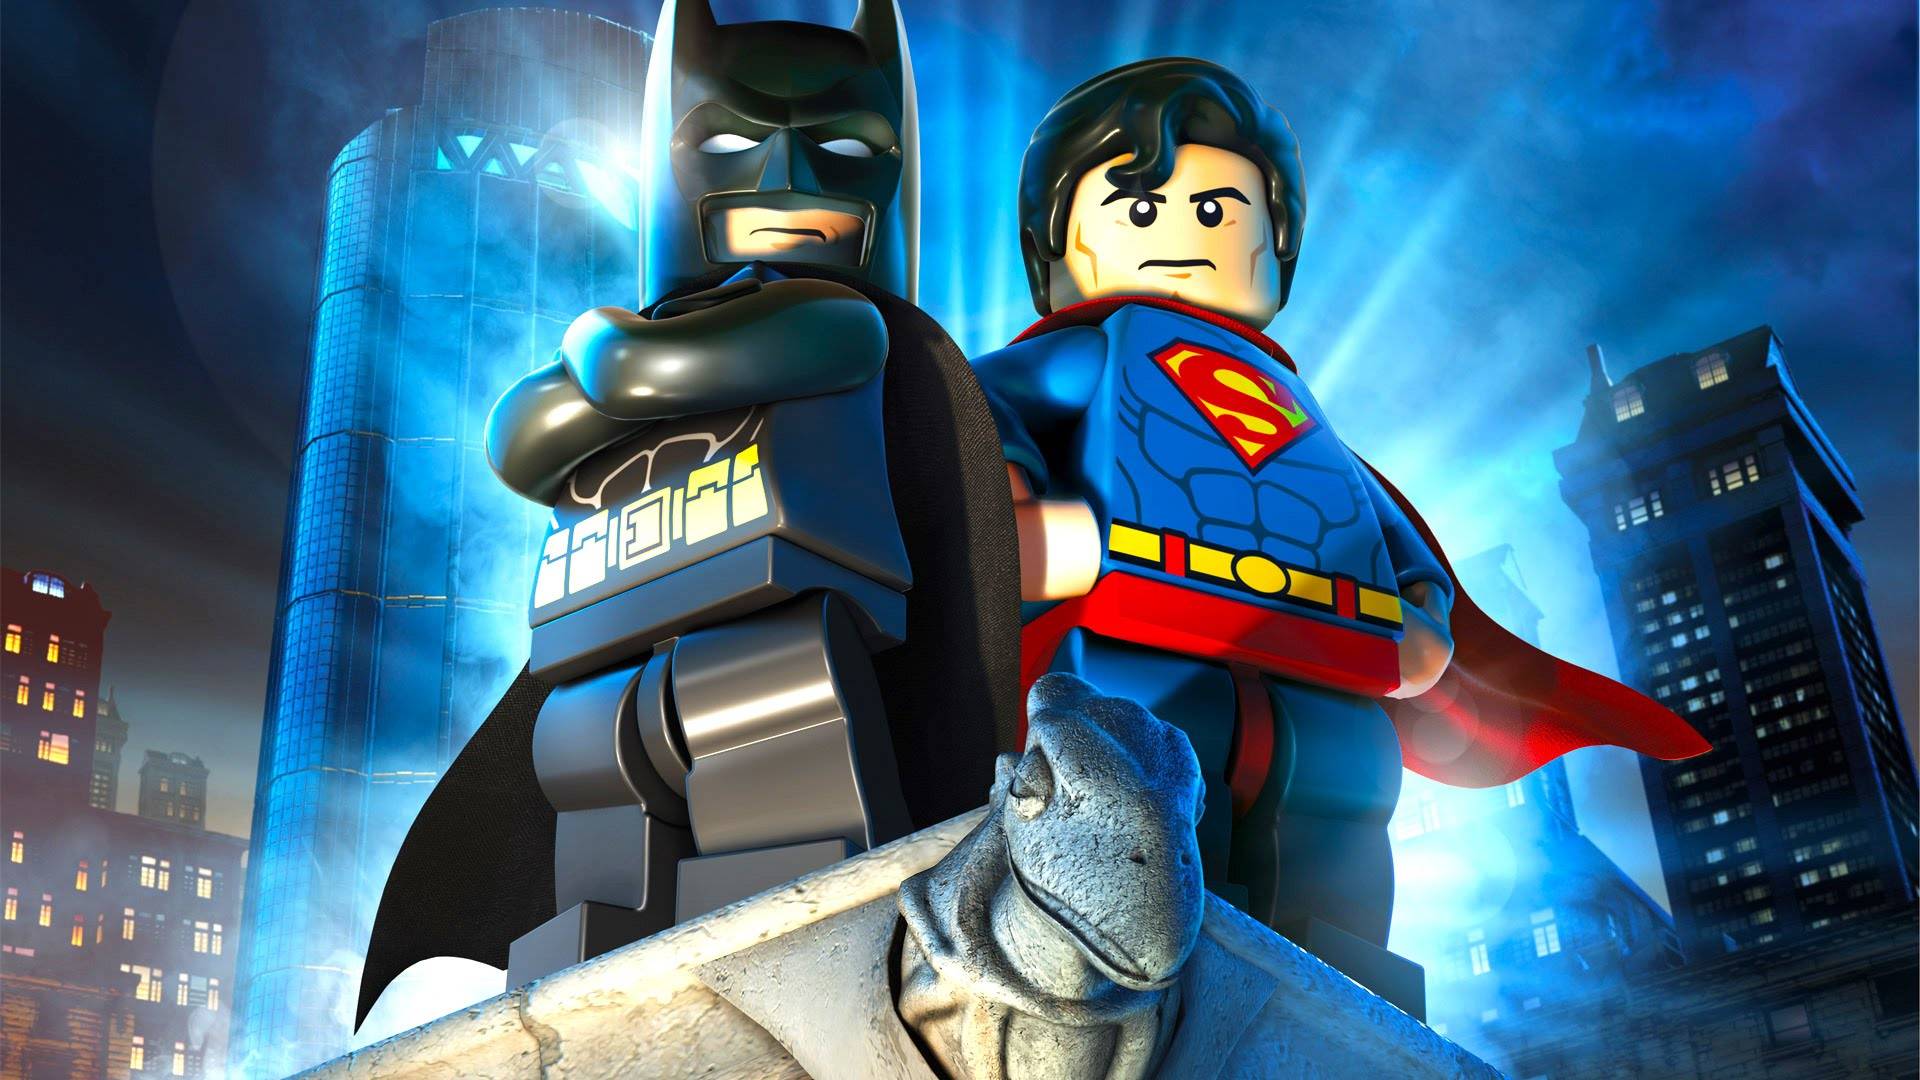 LEGO Batman and LEGO Superman